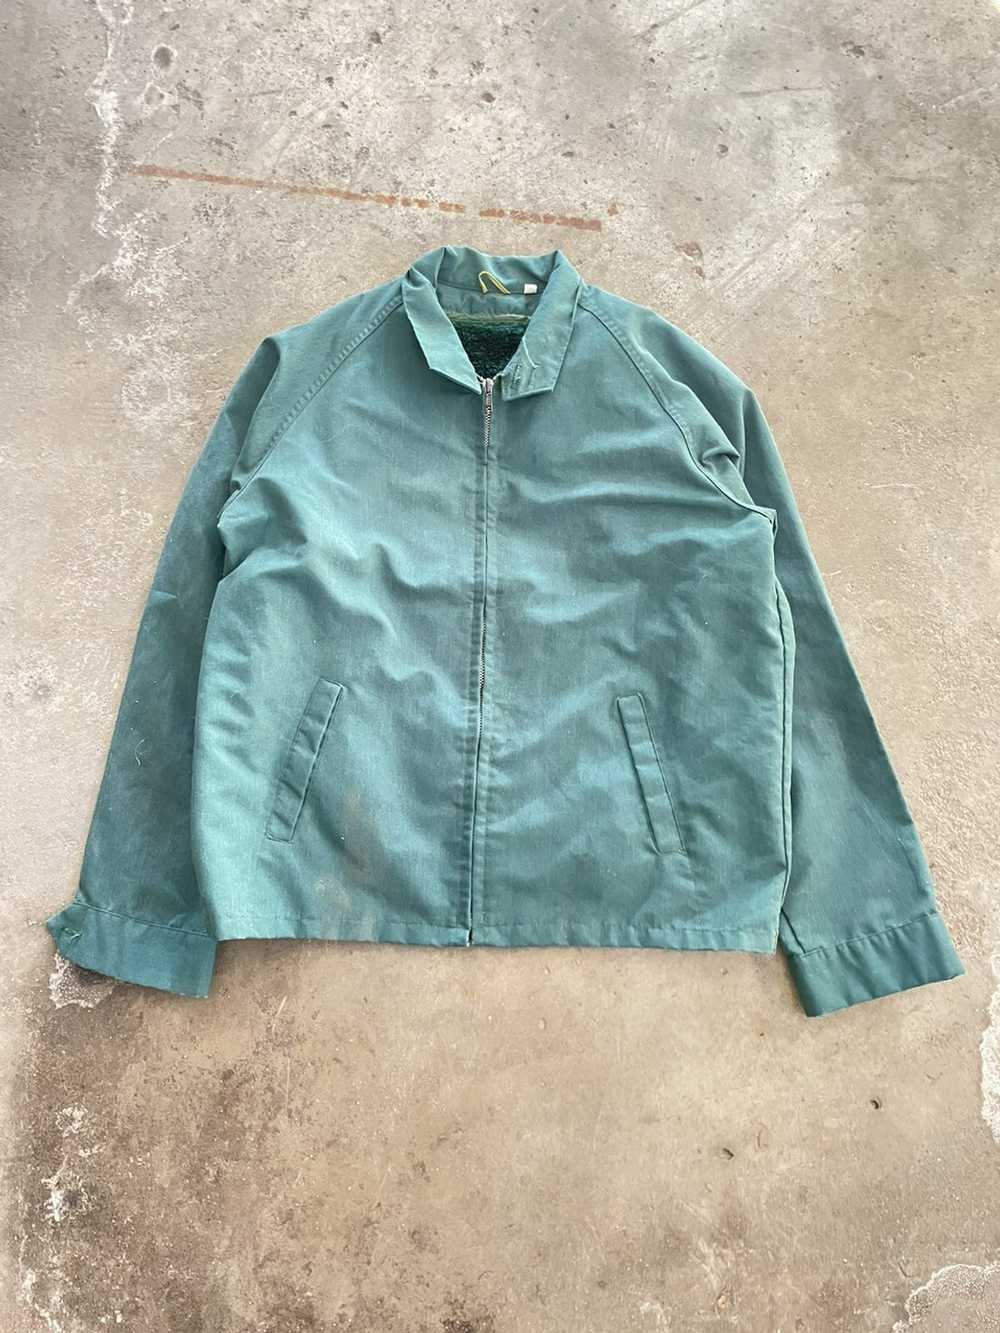 Vintage Vintage 60s sherpa lined harrington jacket - image 1